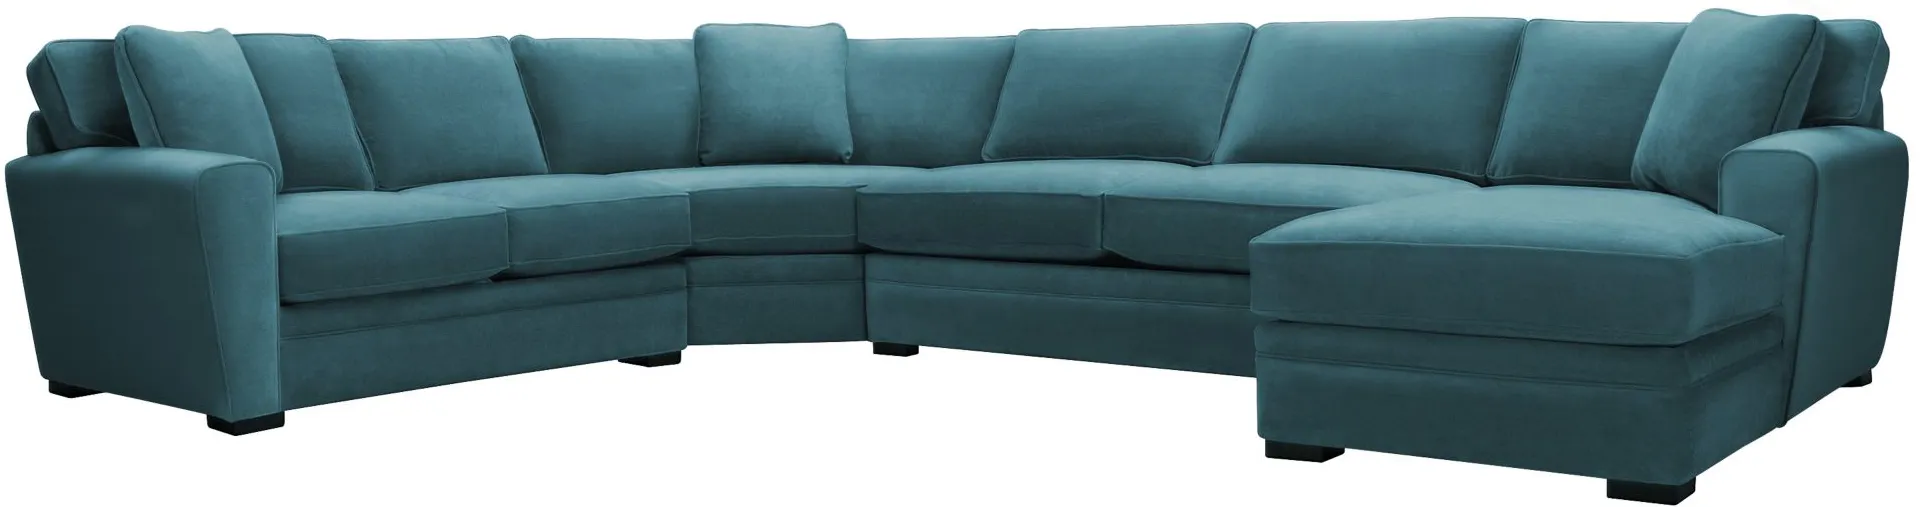 Artemis II 4-pc. Full Sleeper Sectional Sofa in Gypsy Teal by Jonathan Louis